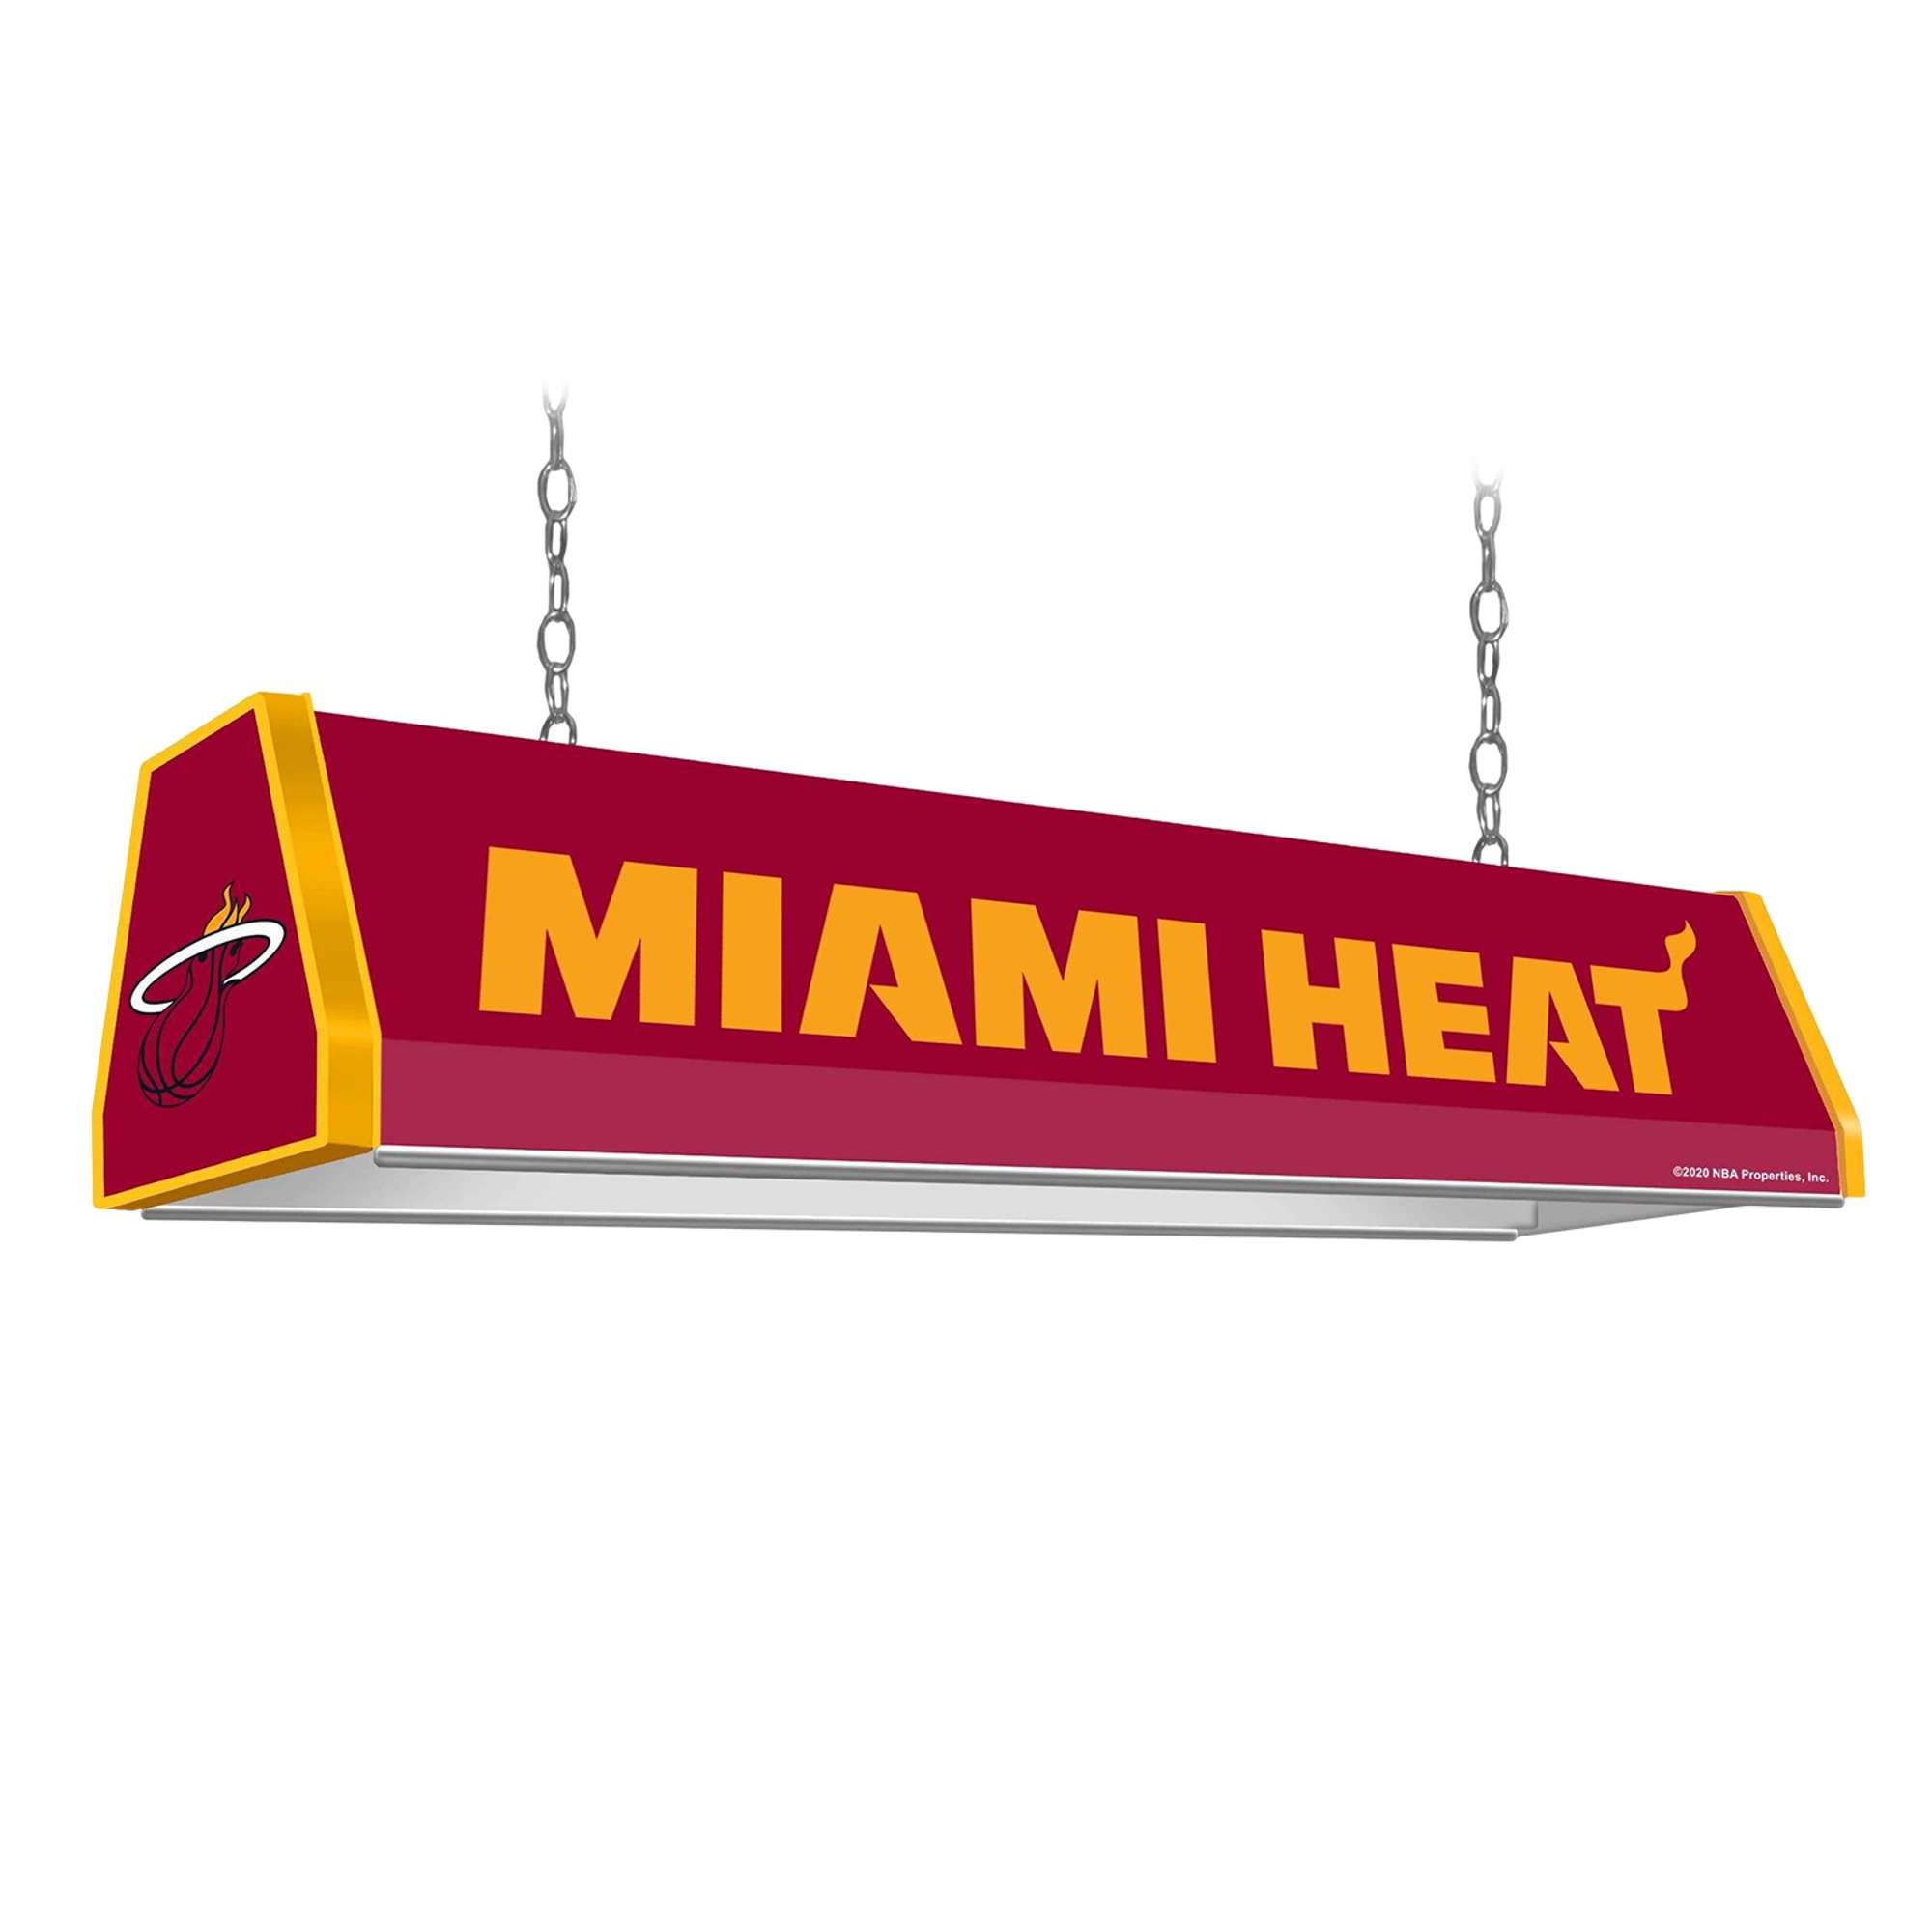 Miami Heat: Standard Pool Table Light